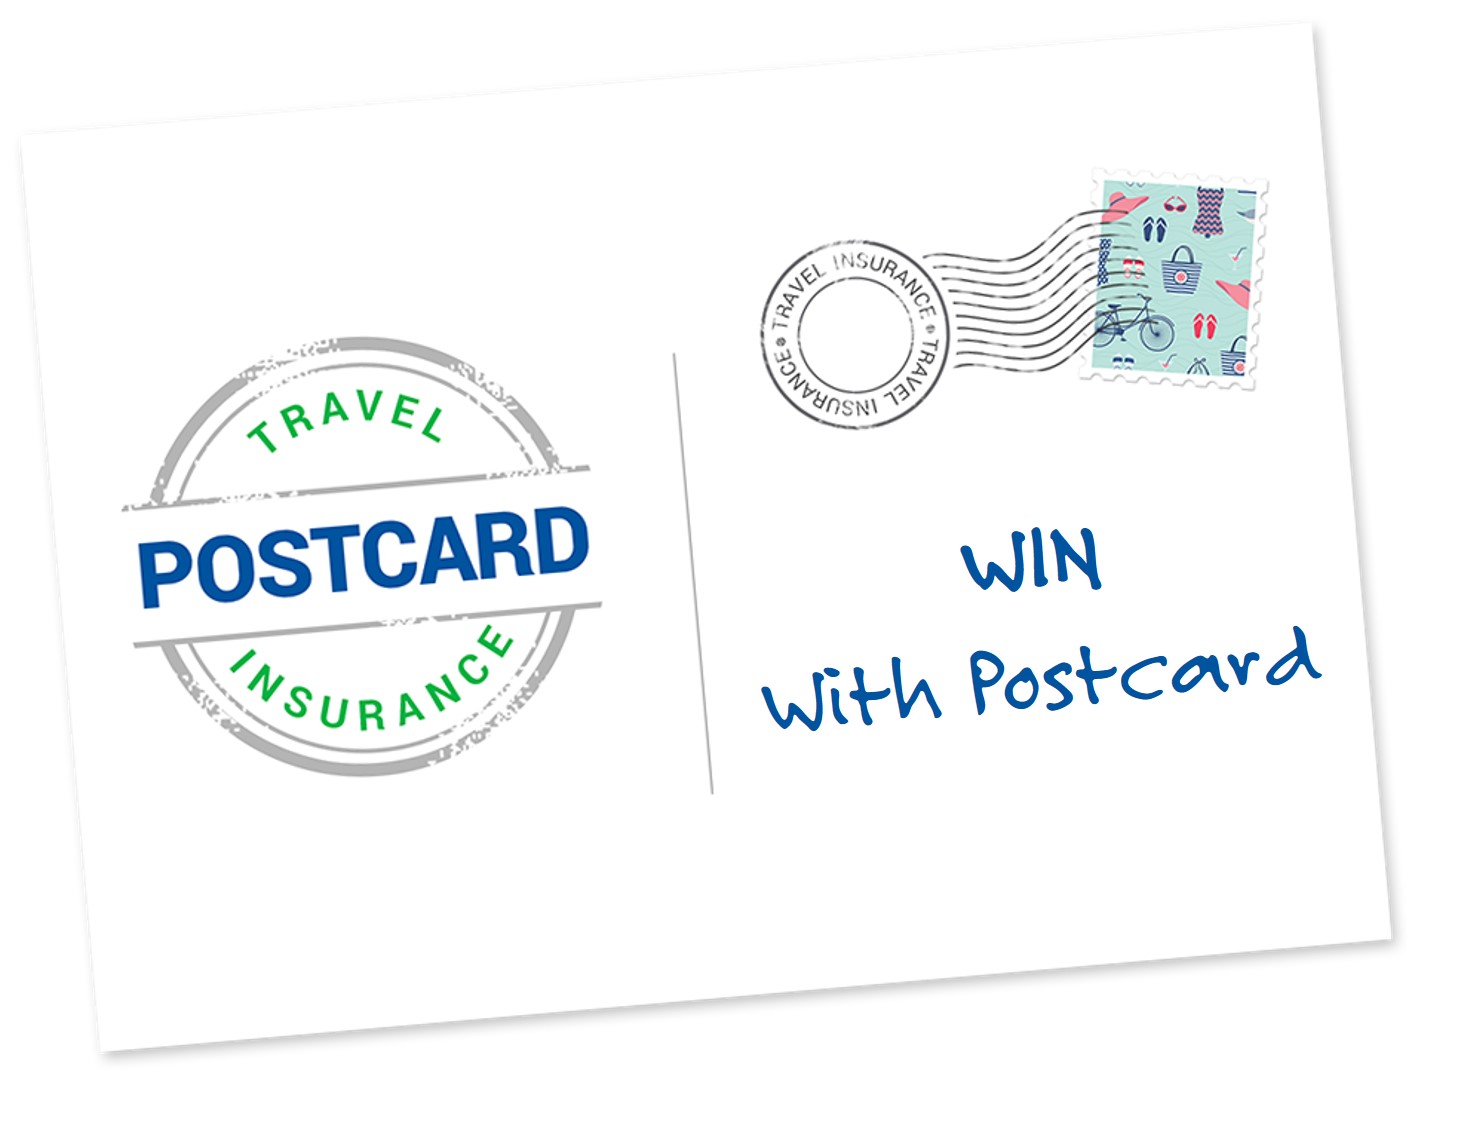 postcard travel insurance